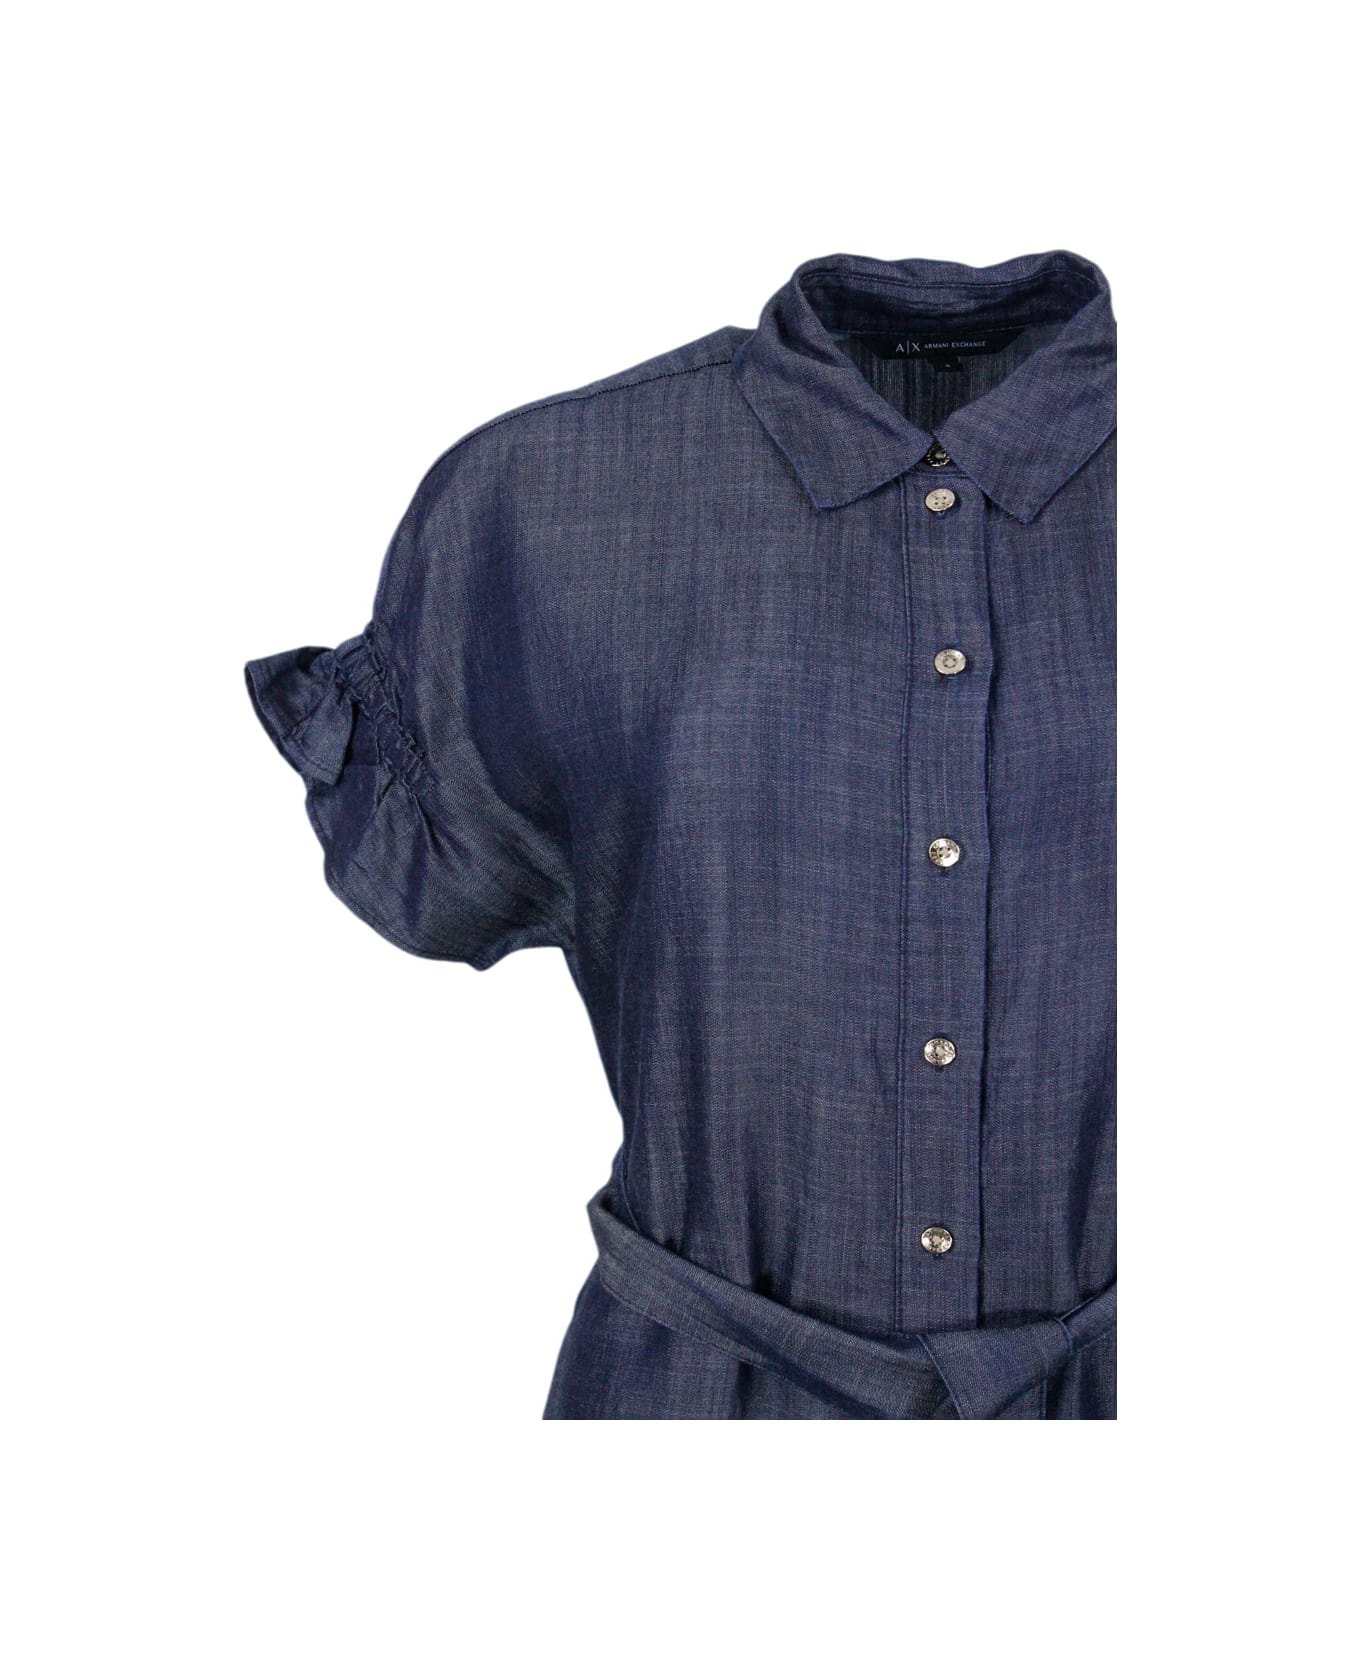 Armani Collezioni Lightweight Denim Dress With Gathered Sleeves With Button Closure And Belt Supplied - Denim Dark